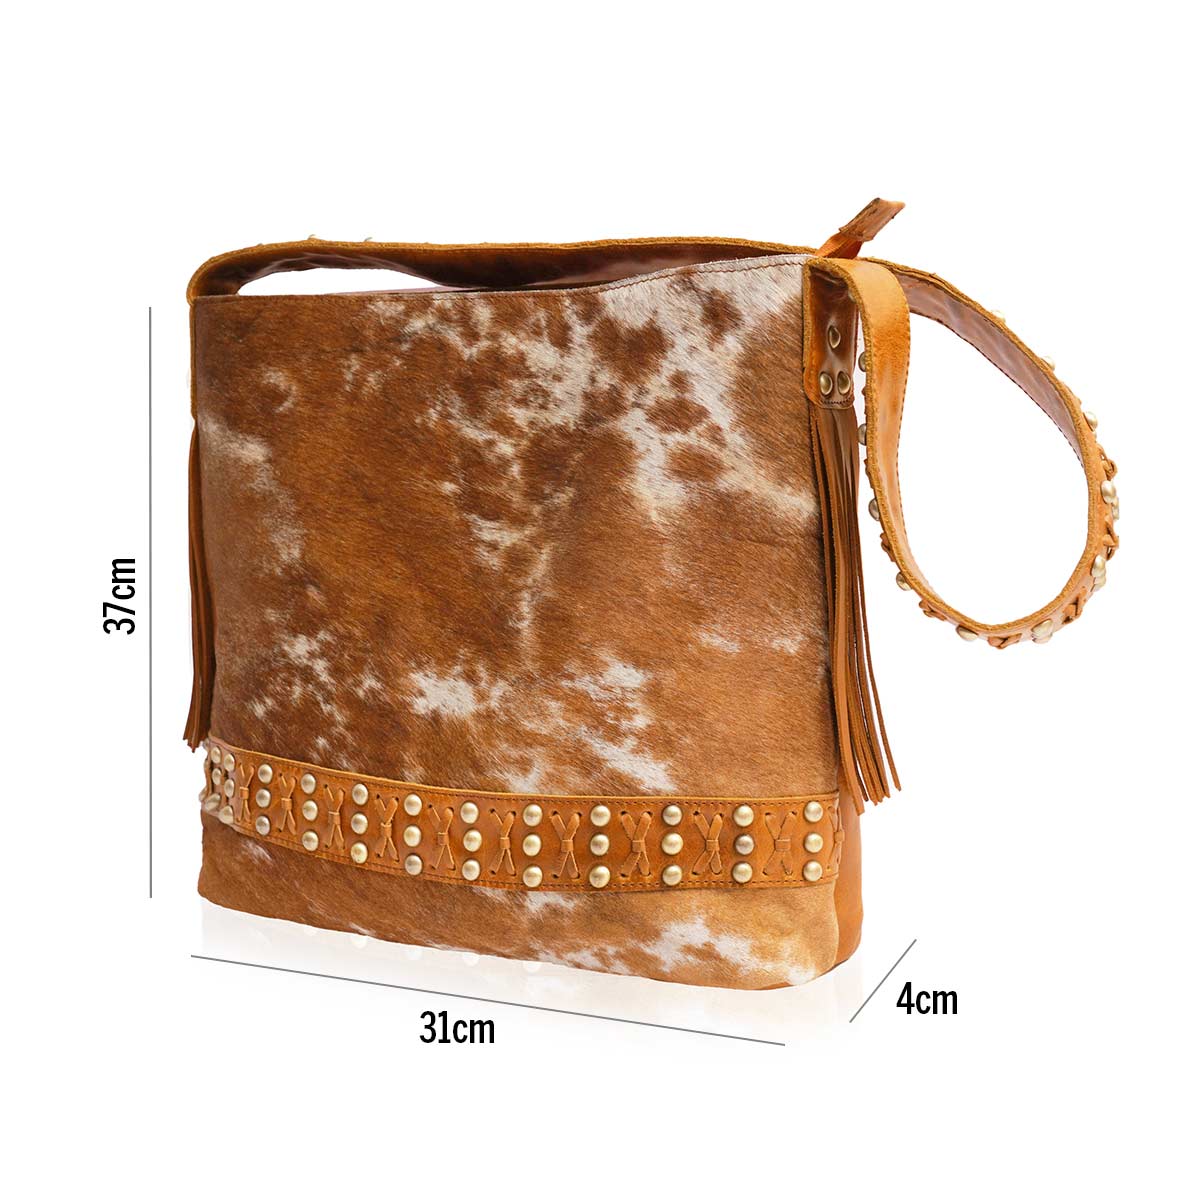 CoboeHi- Leather Tote Bag